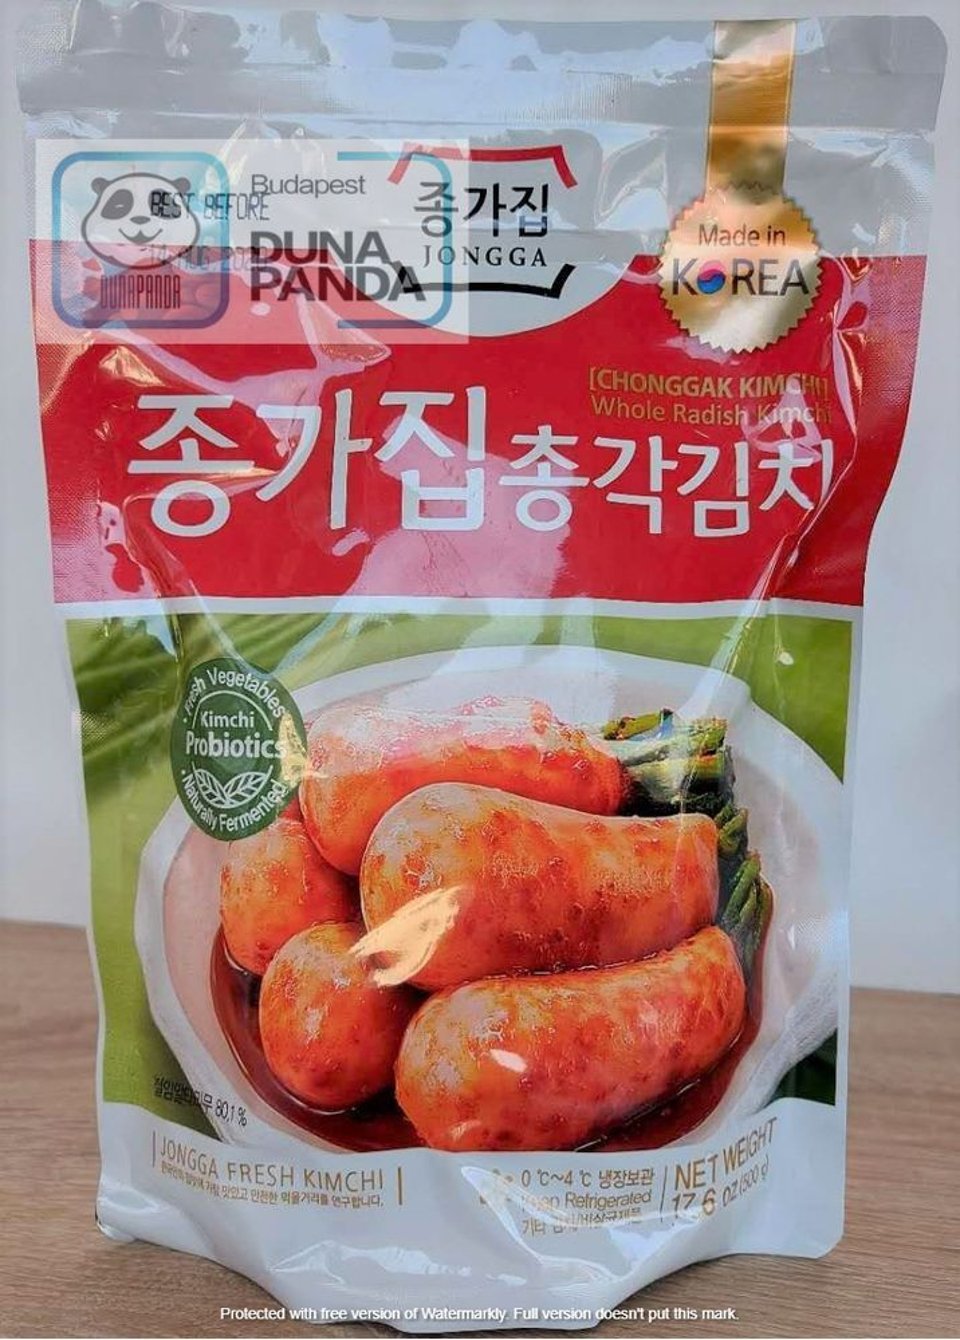 Jongga Kimchi Radish Whole